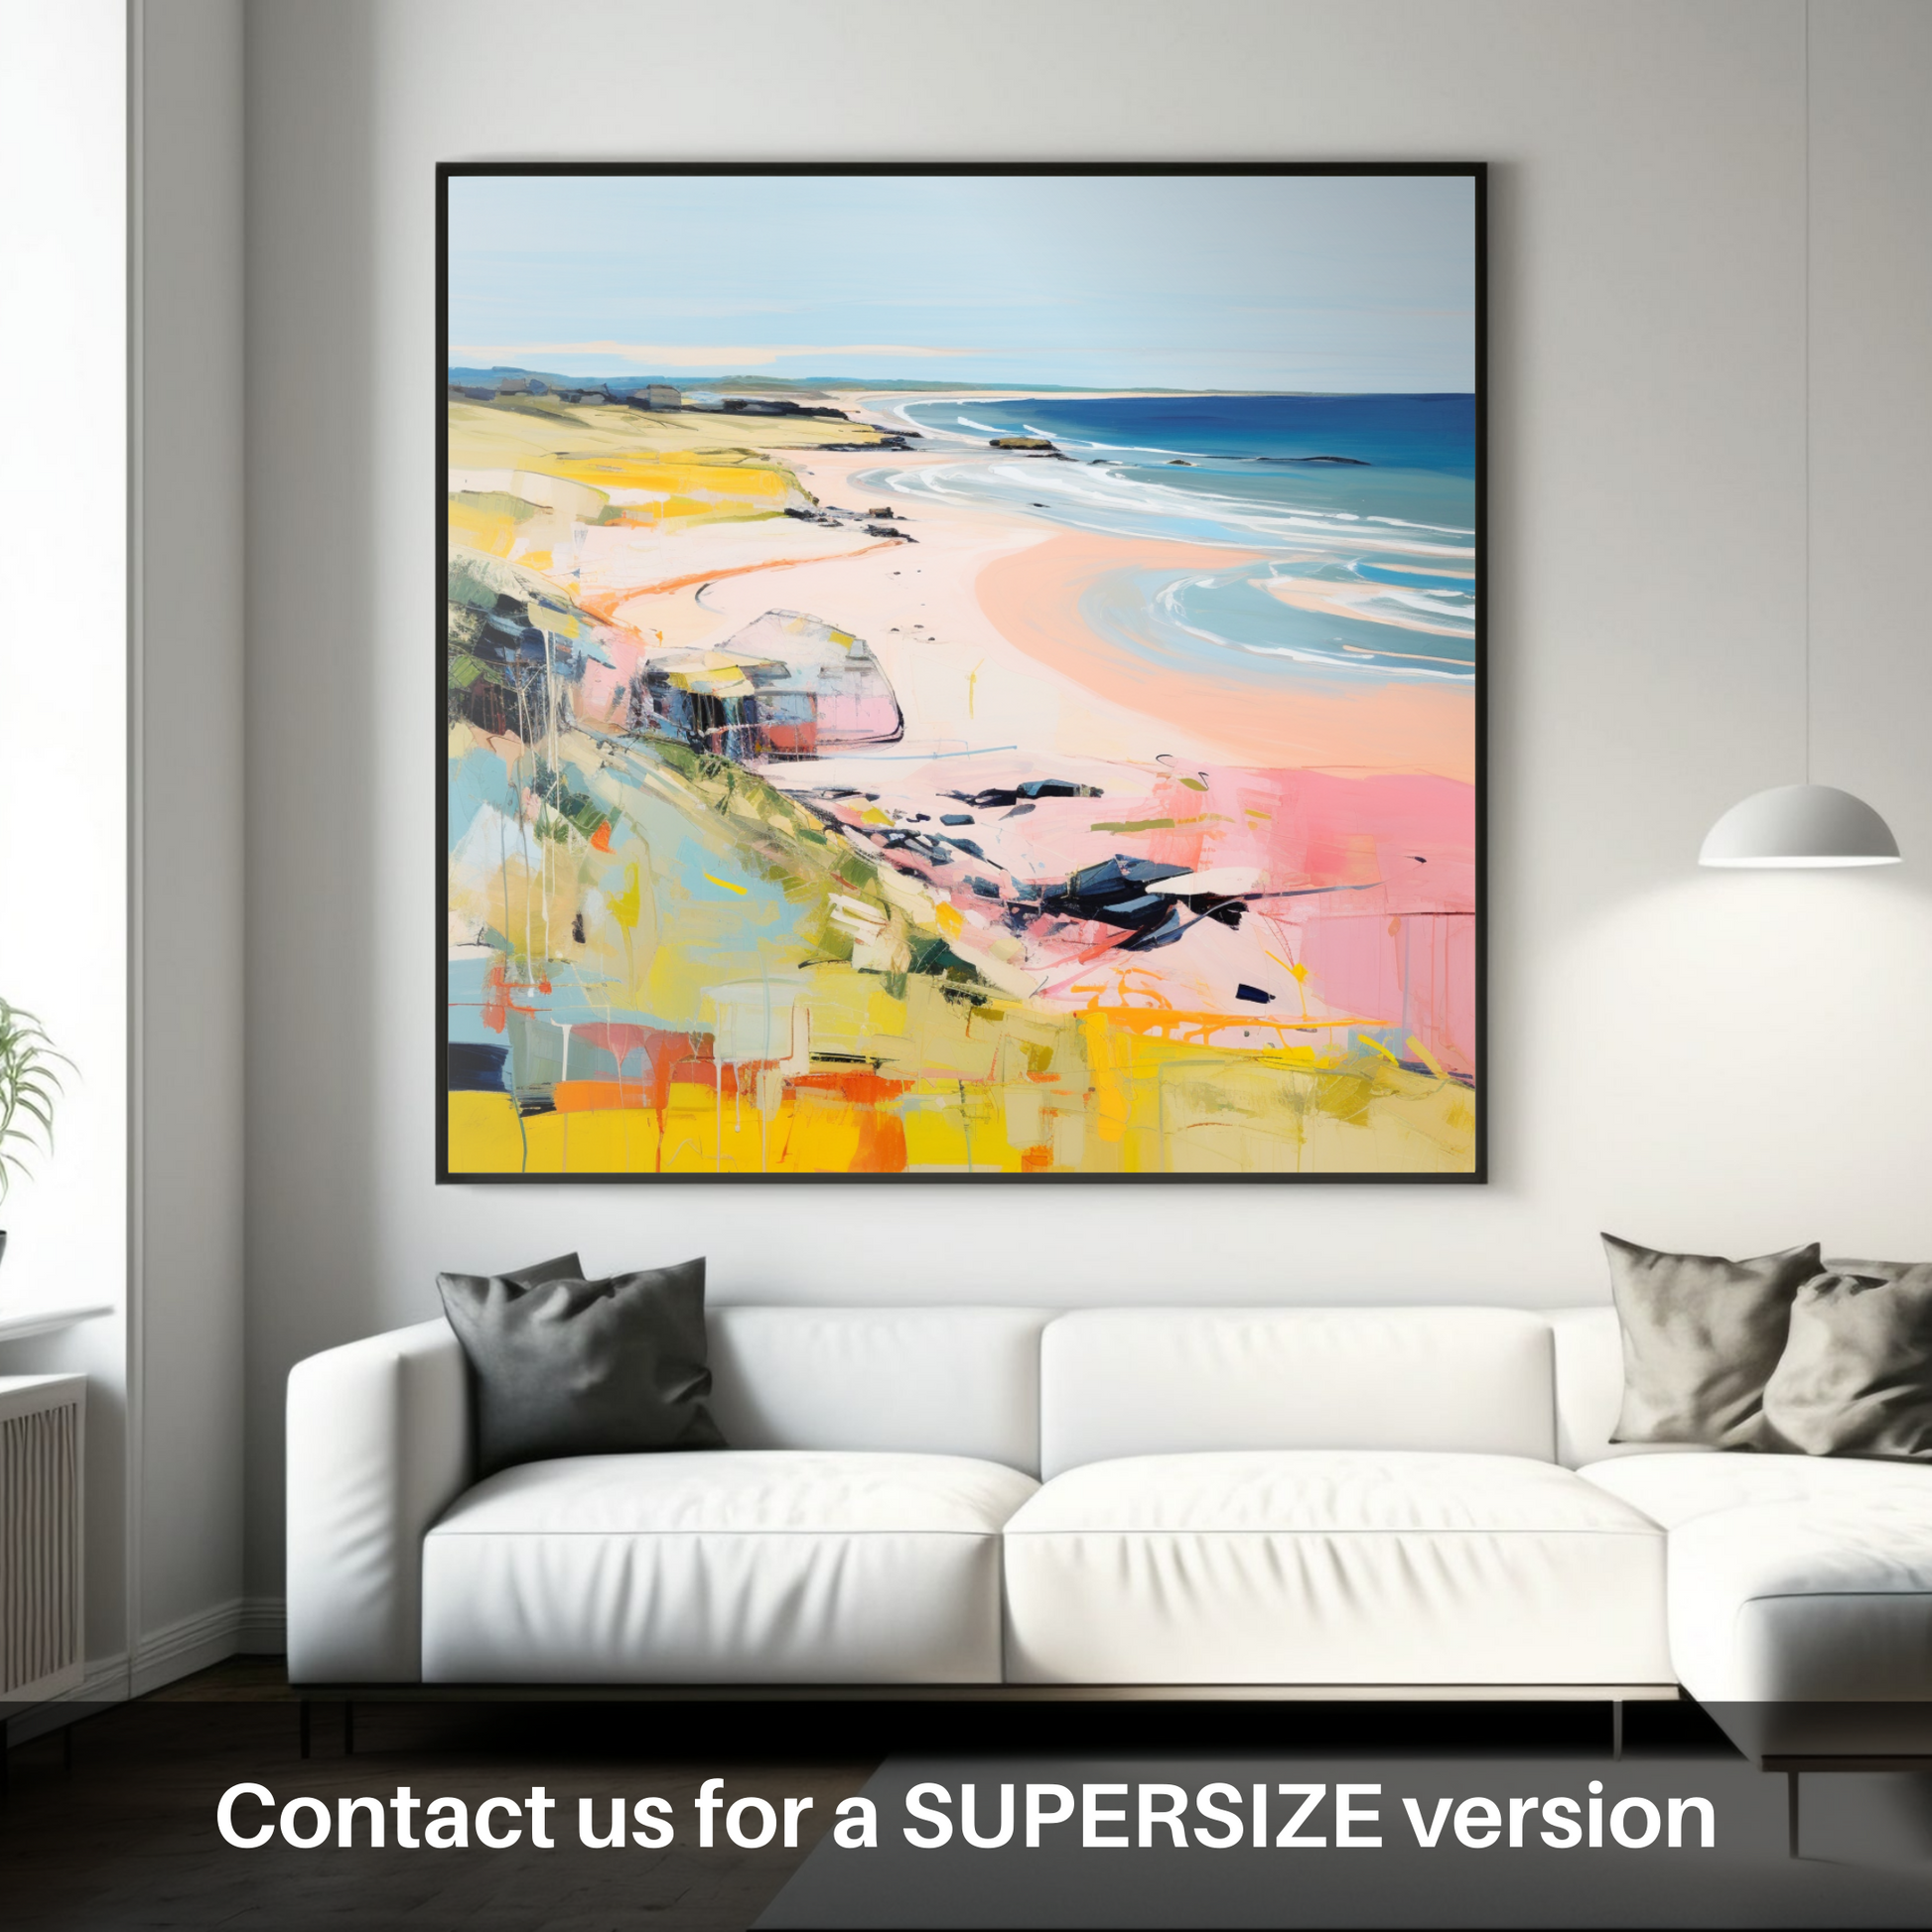 Huge supersize print of St Cyrus Beach, Aberdeenshire in summer